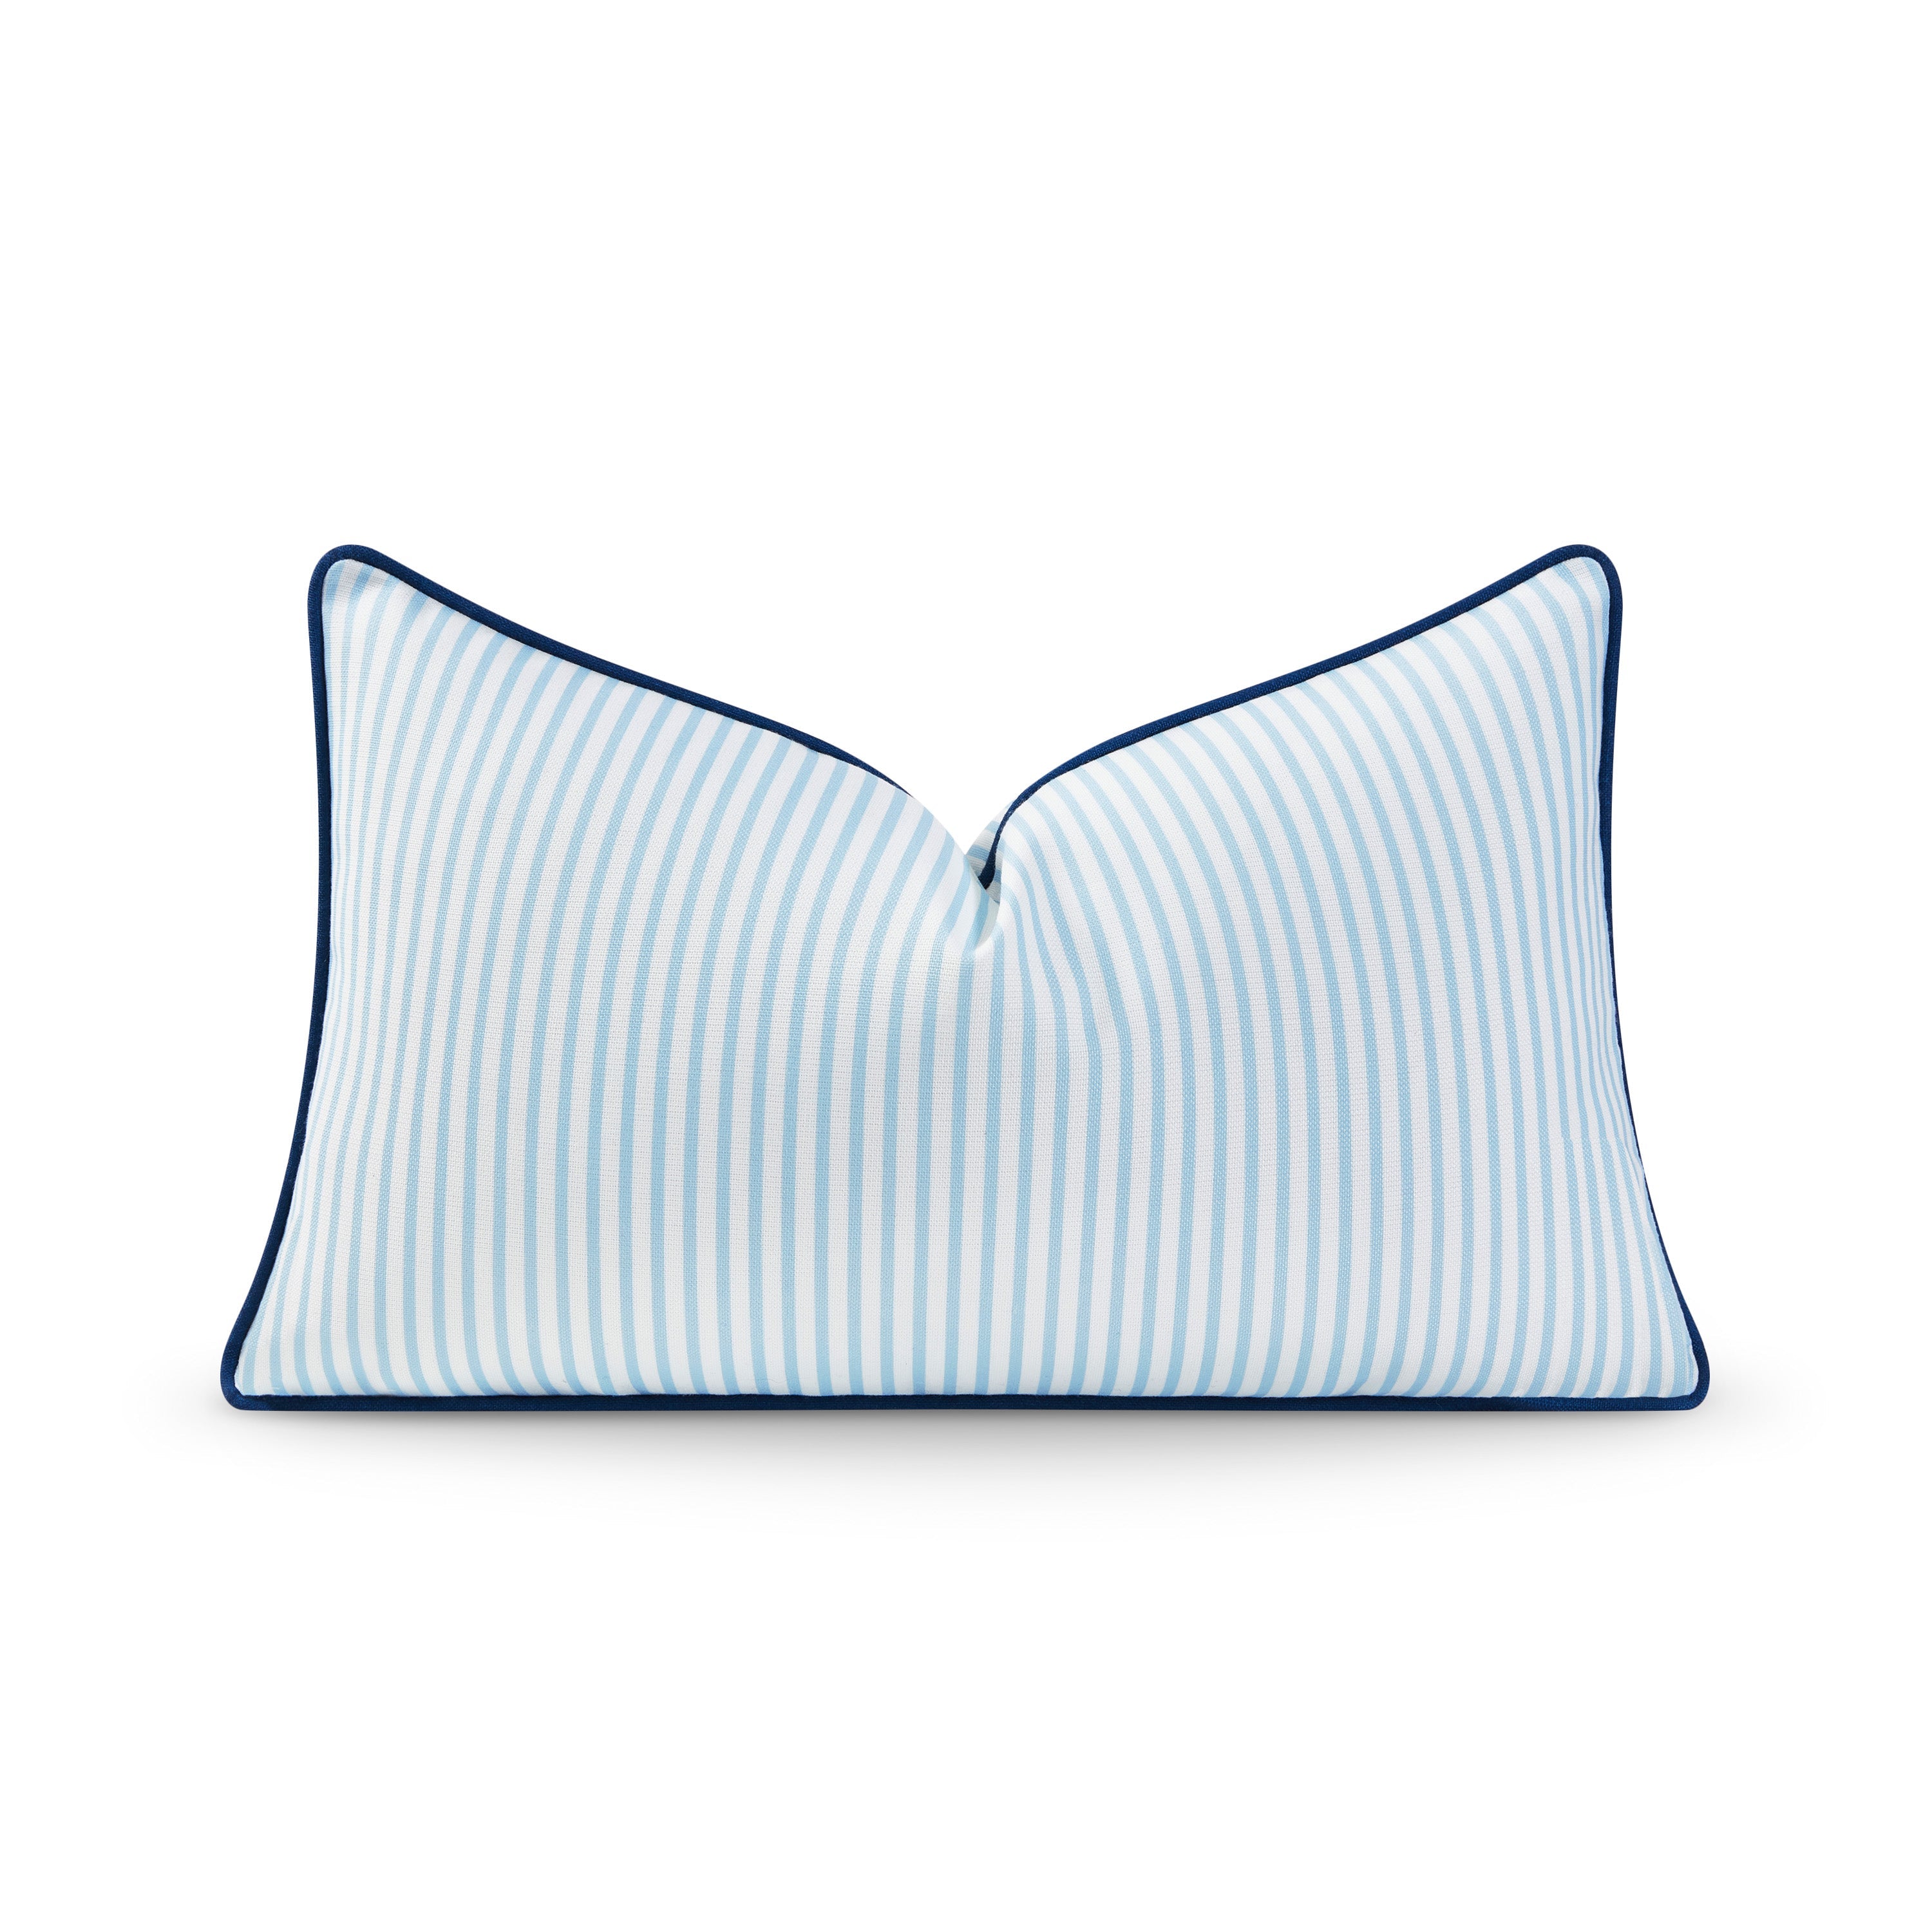 Coastal Hampton Style Indoor Outdoor Lumbar Pillow Cover, Stripe, Blue, 12"x20"-0